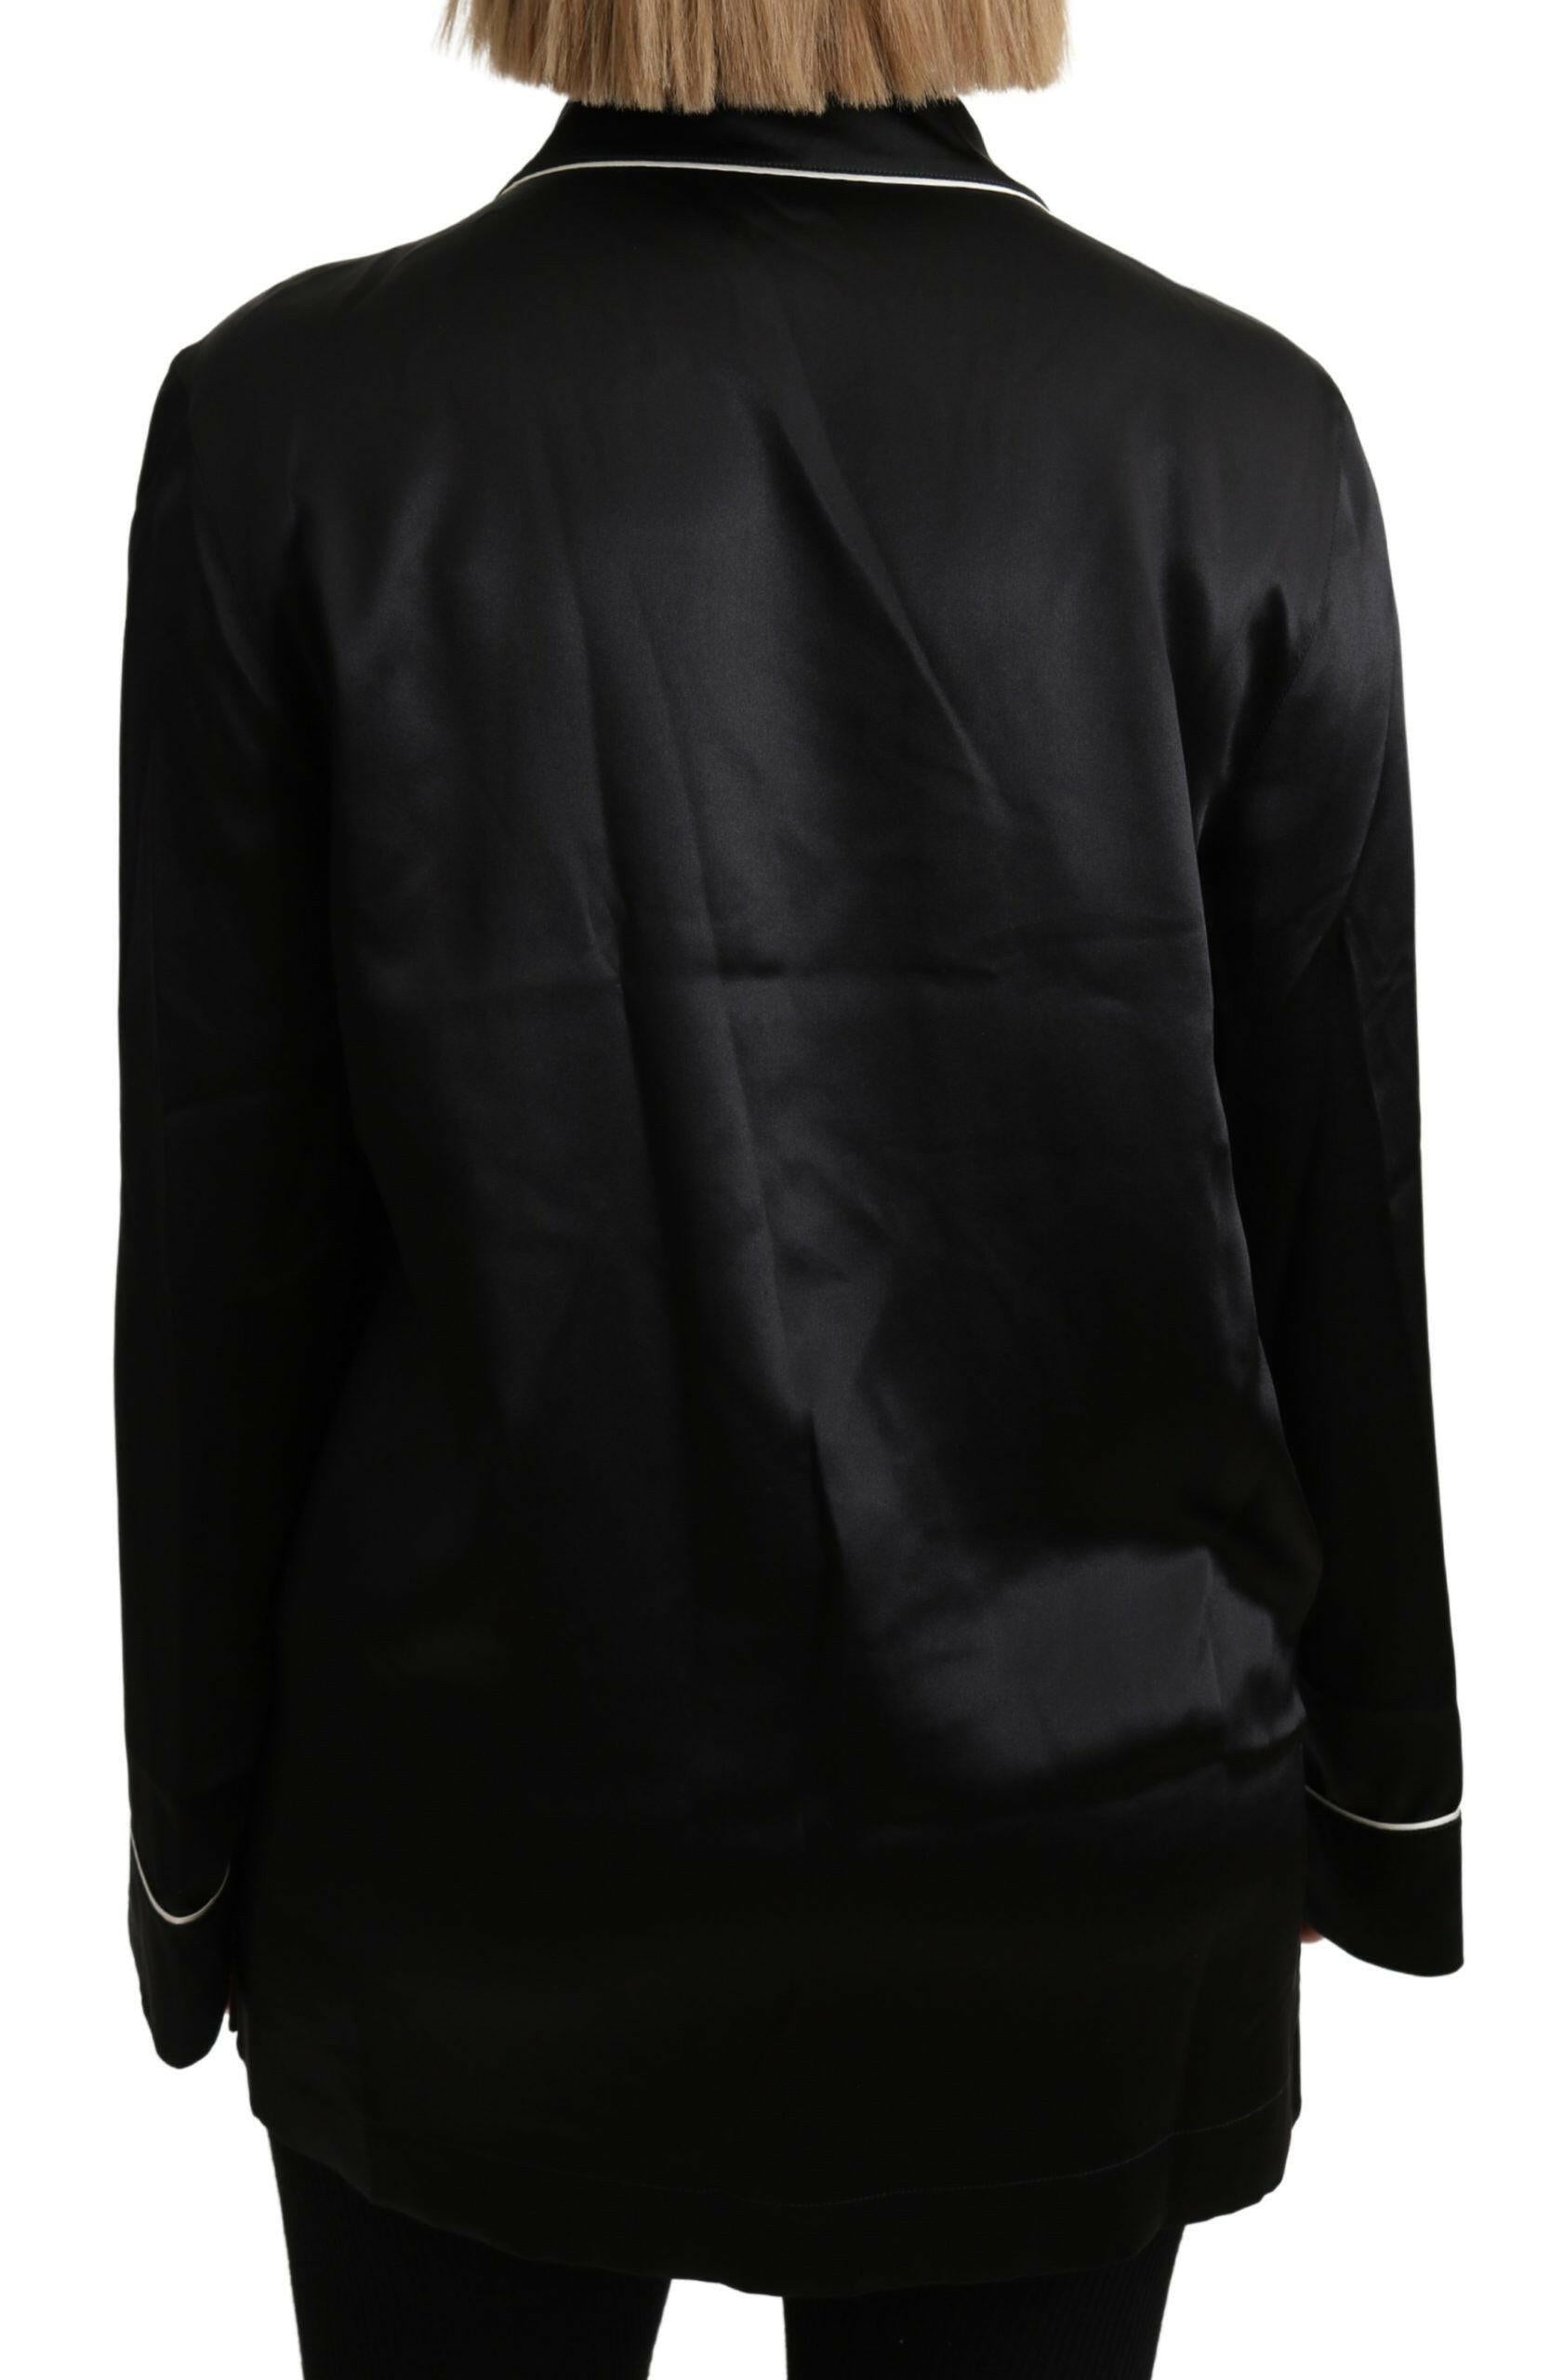 Dolce & Gabbana Black Shirt Silk Stretch Top Blouse - GENUINE AUTHENTIC BRAND LLC  